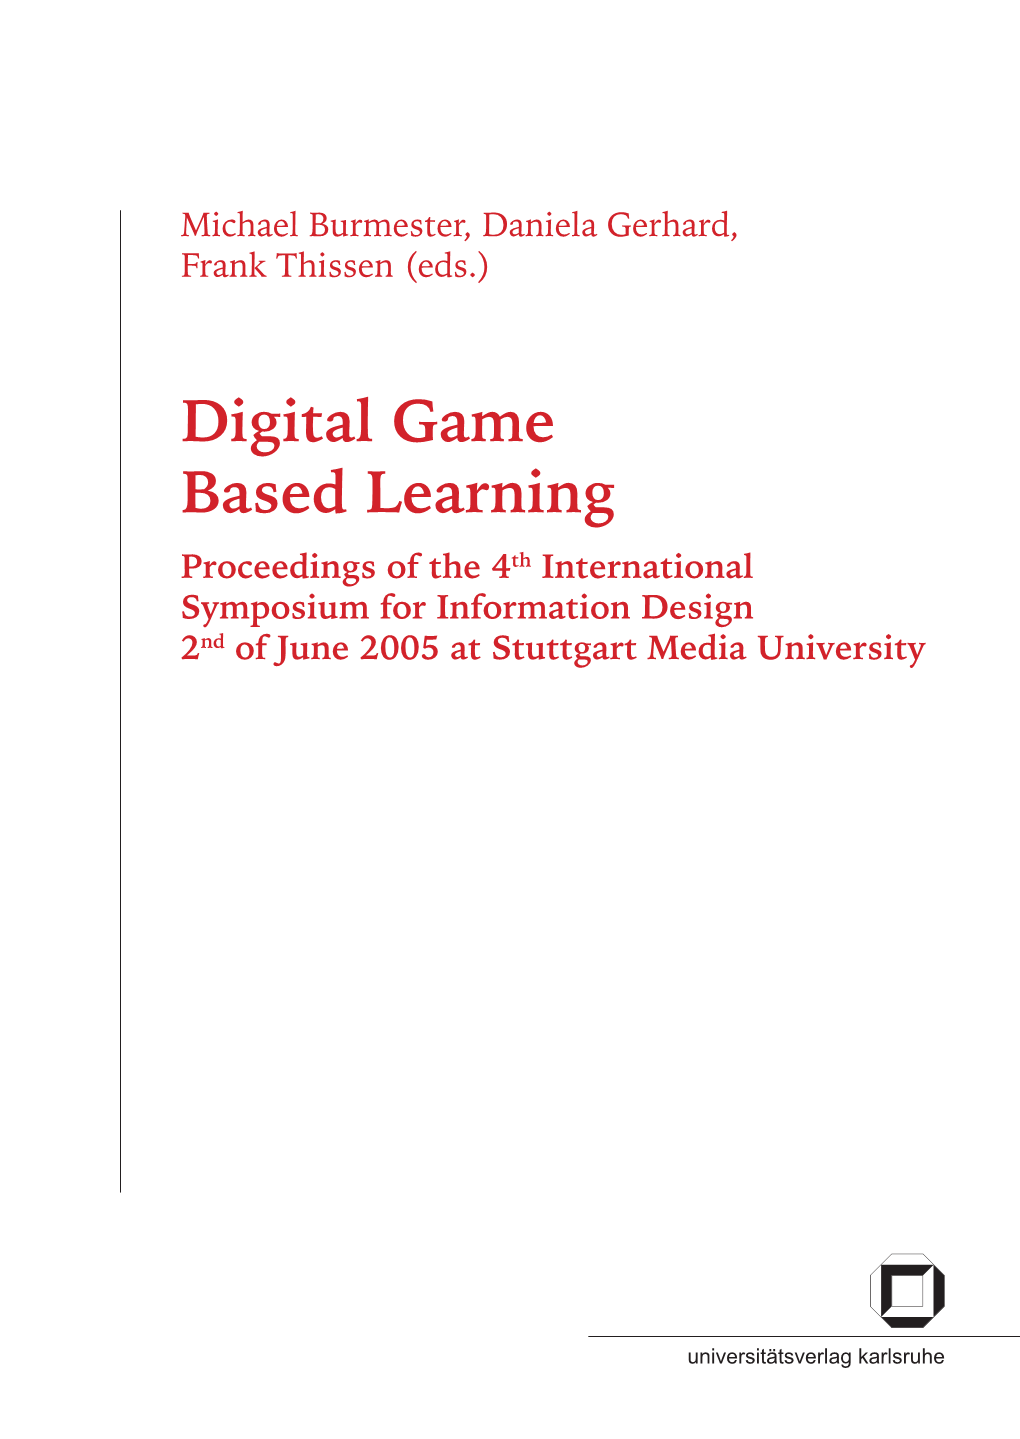 Digital Game Based Learning Proceedings of the 4Th International Symposium for Information Design 2Nd of June 2005 at Stuttgart Media University